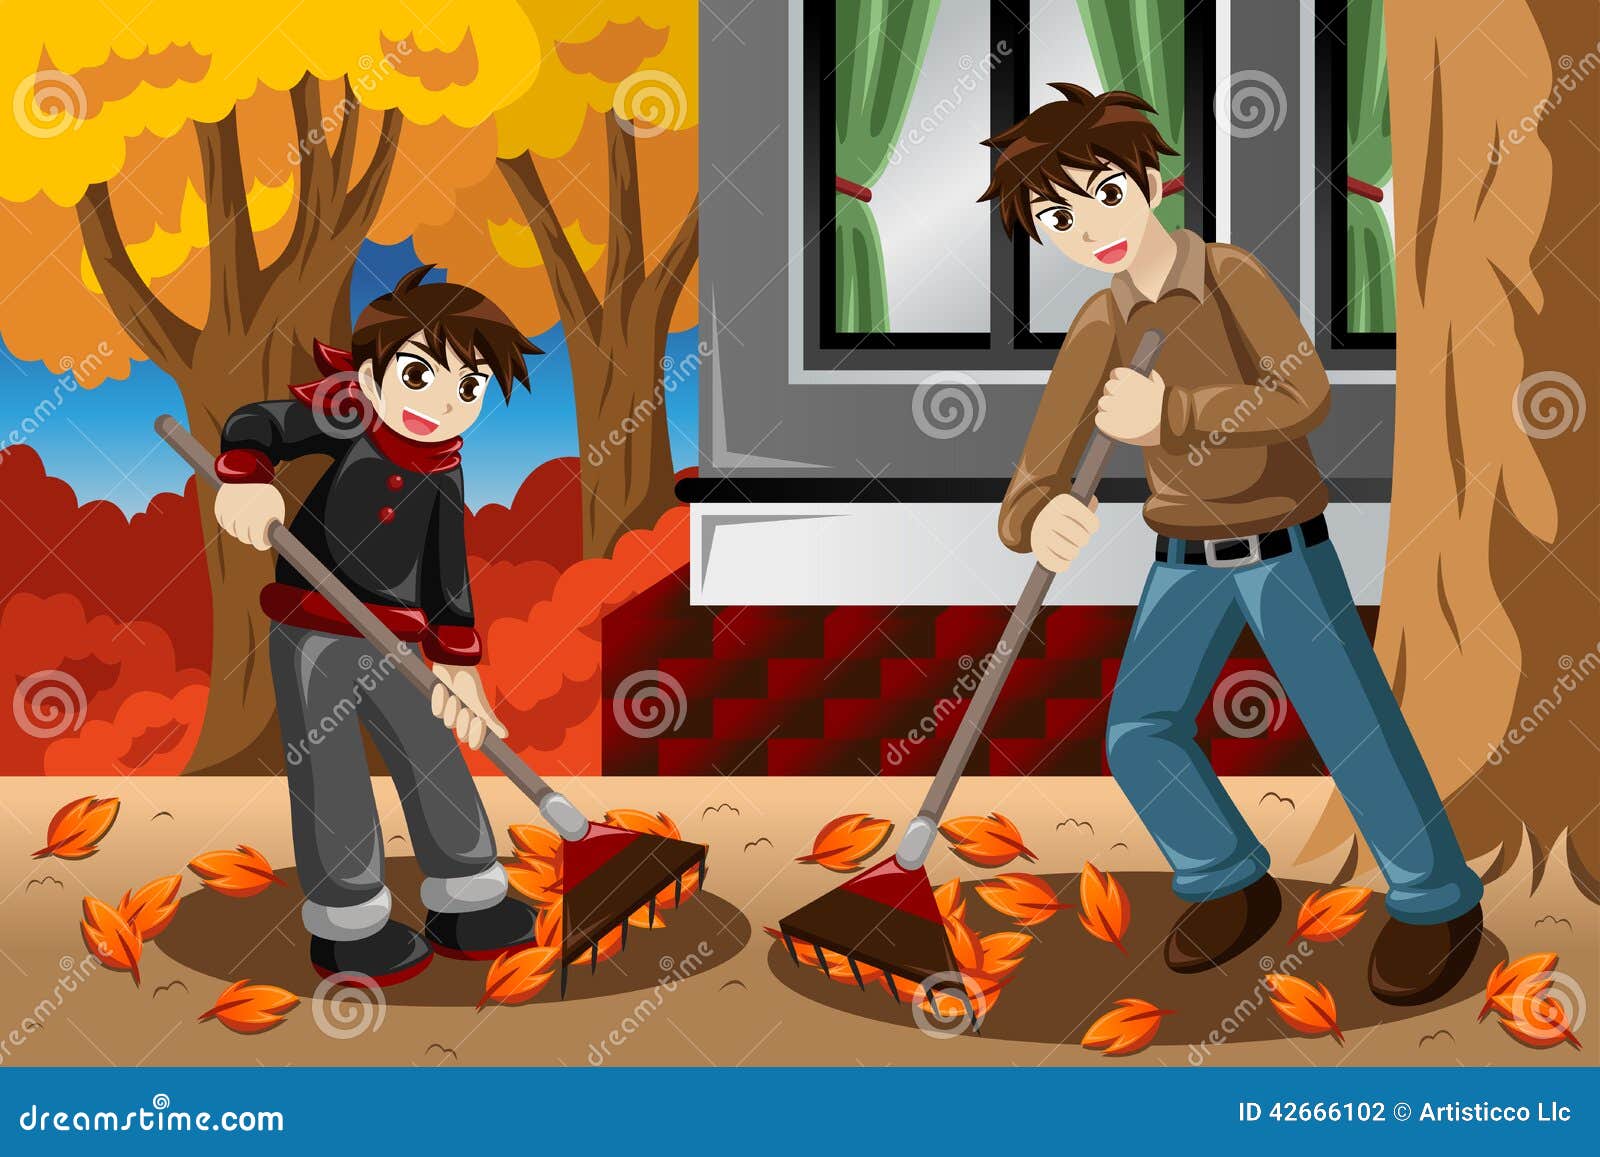 Father Son Raking Leaves During Fall Season Stock Vector - Image: 42666102